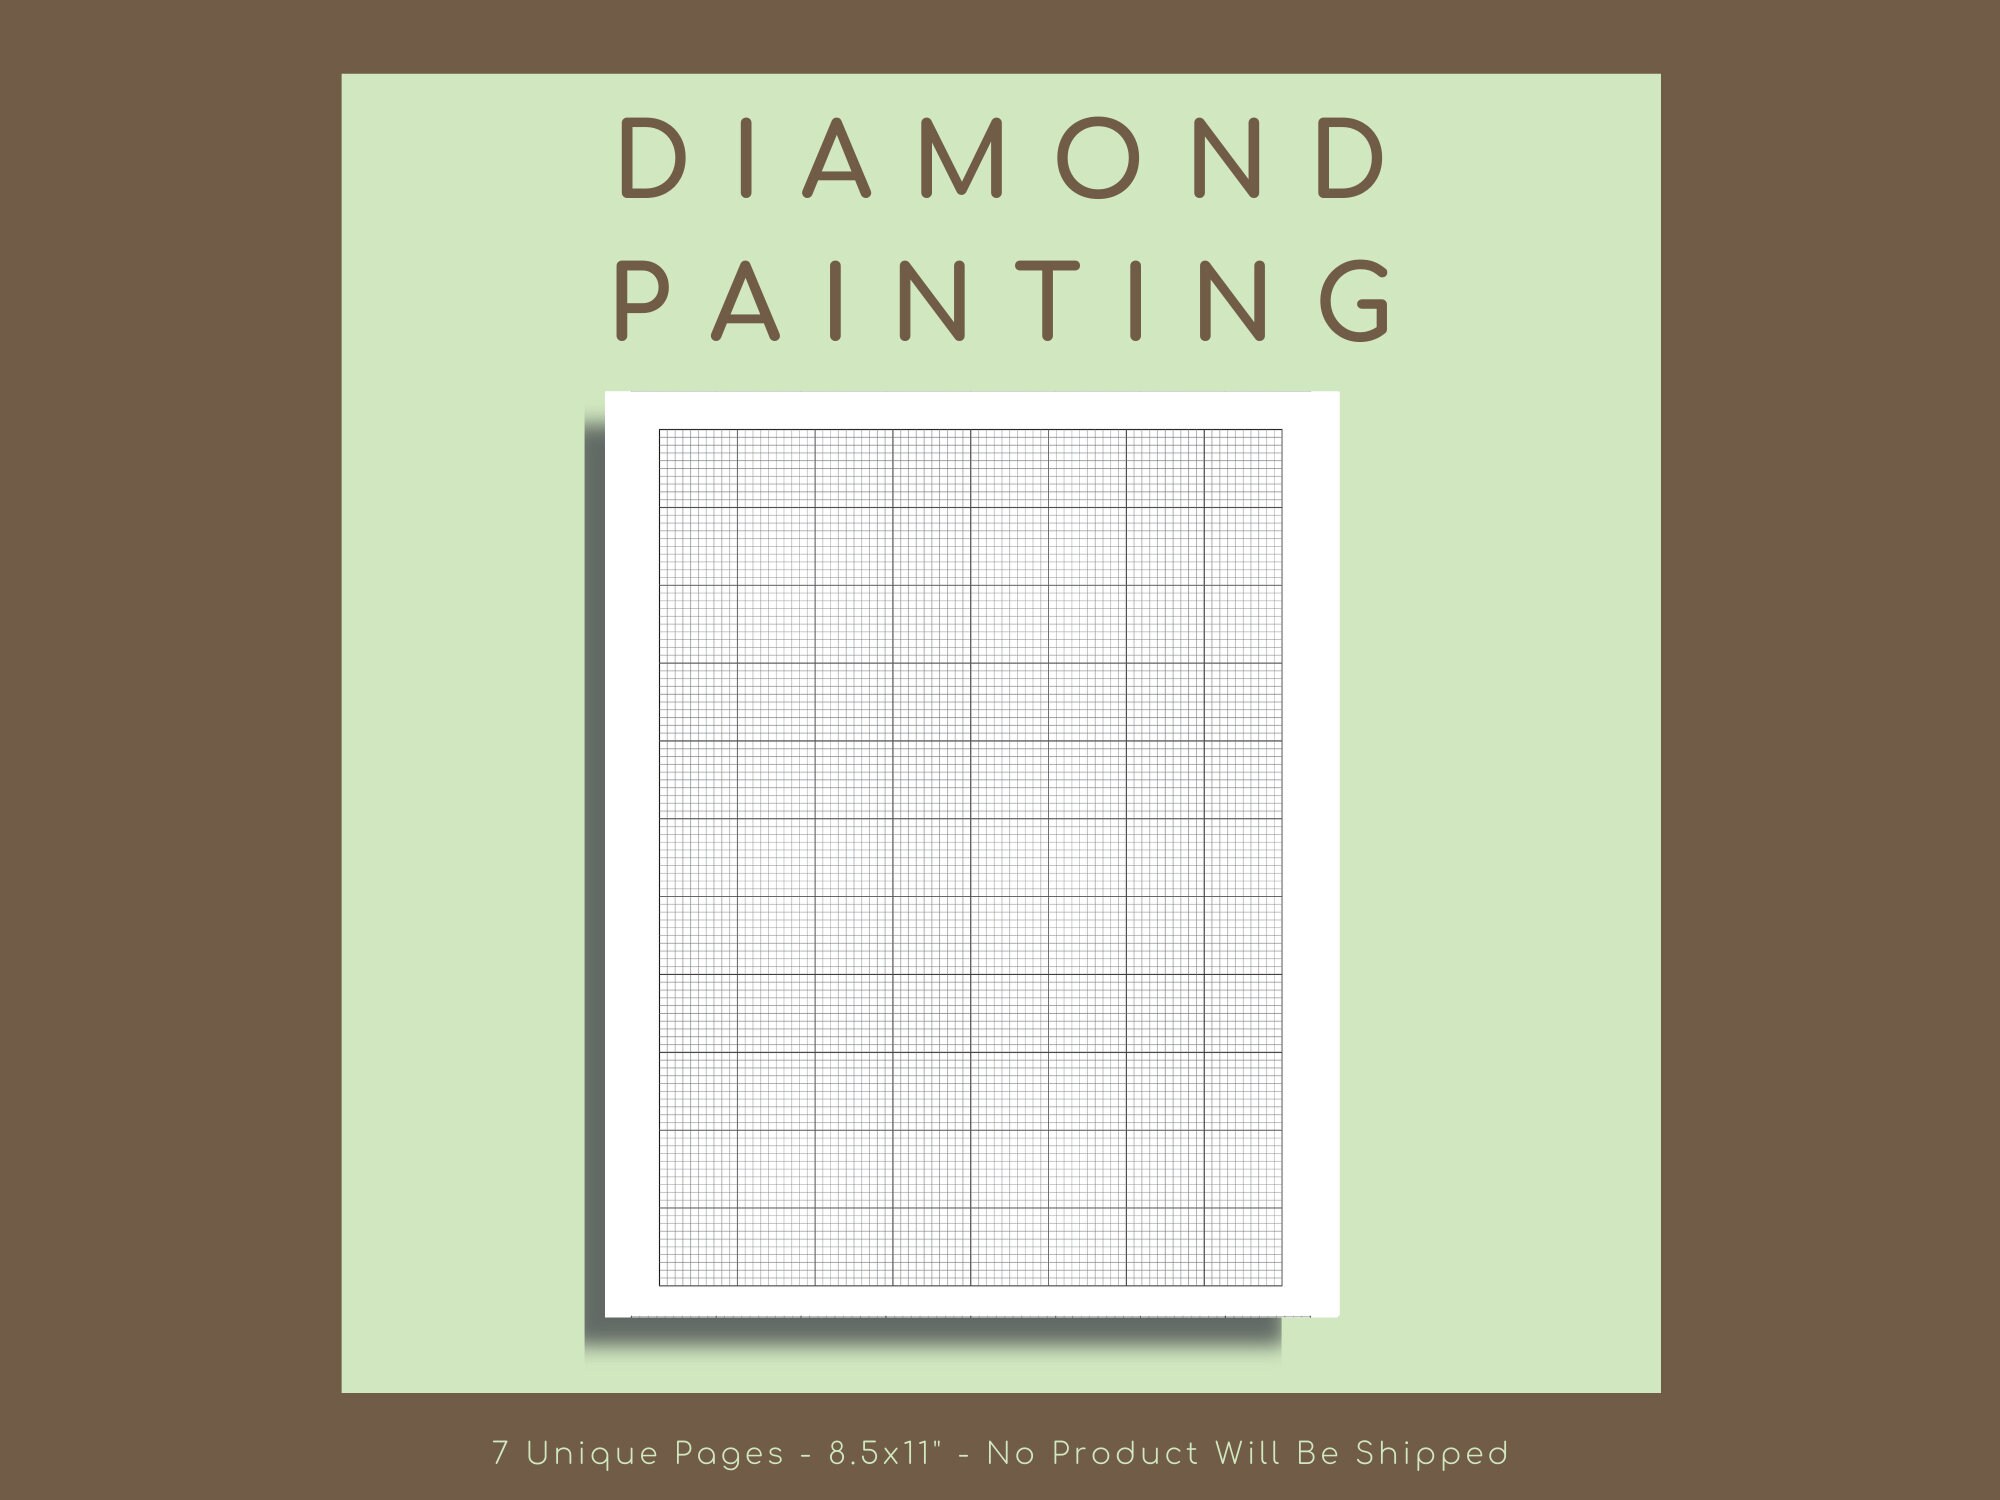 Diamond Painting Journal, DIY Paint by Diamonds Organizer, Project